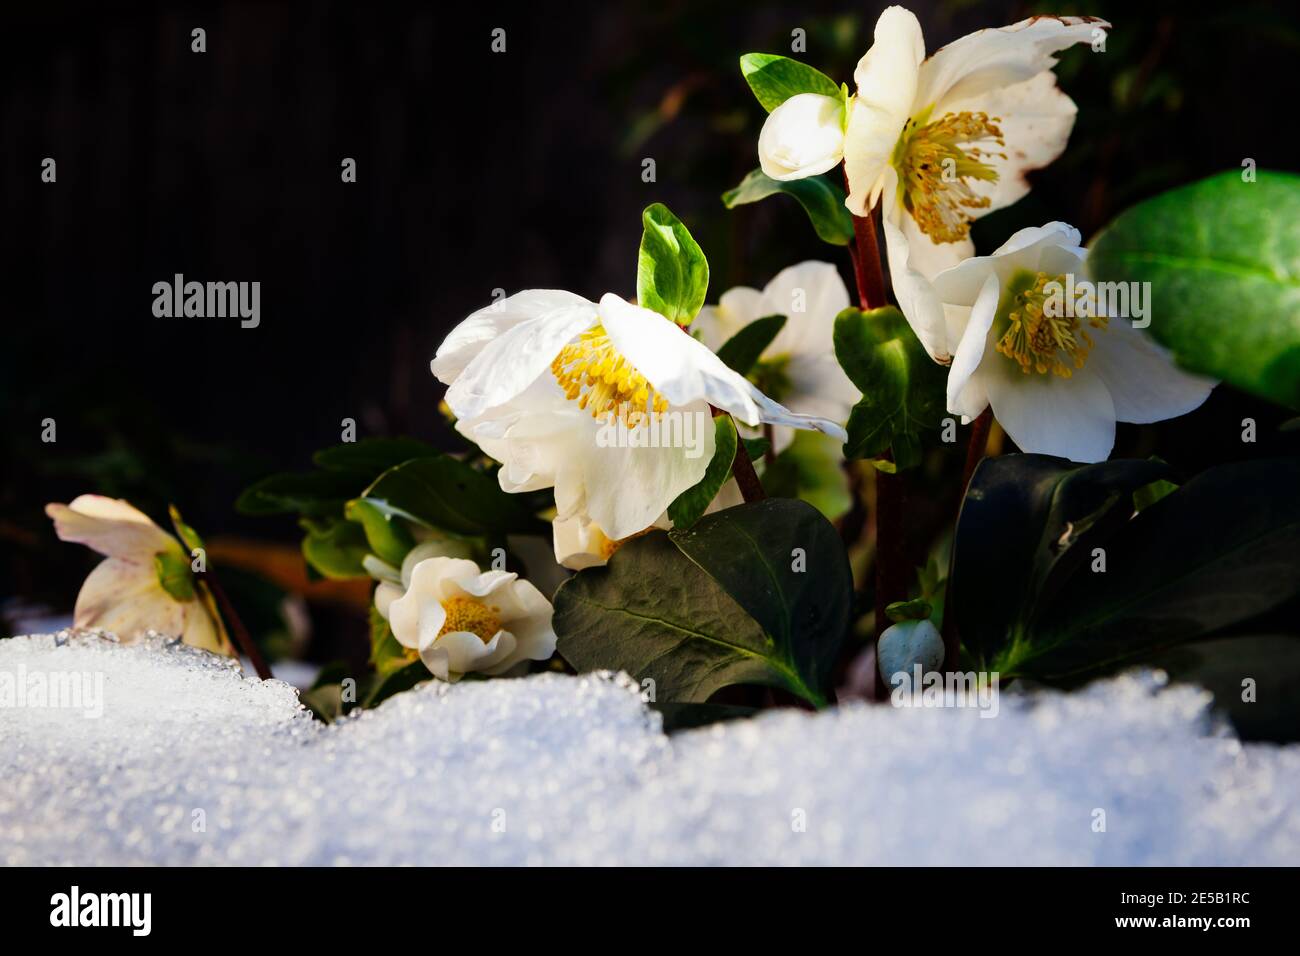 Christmas rose, Helleborus niger in the snow Stock Photo